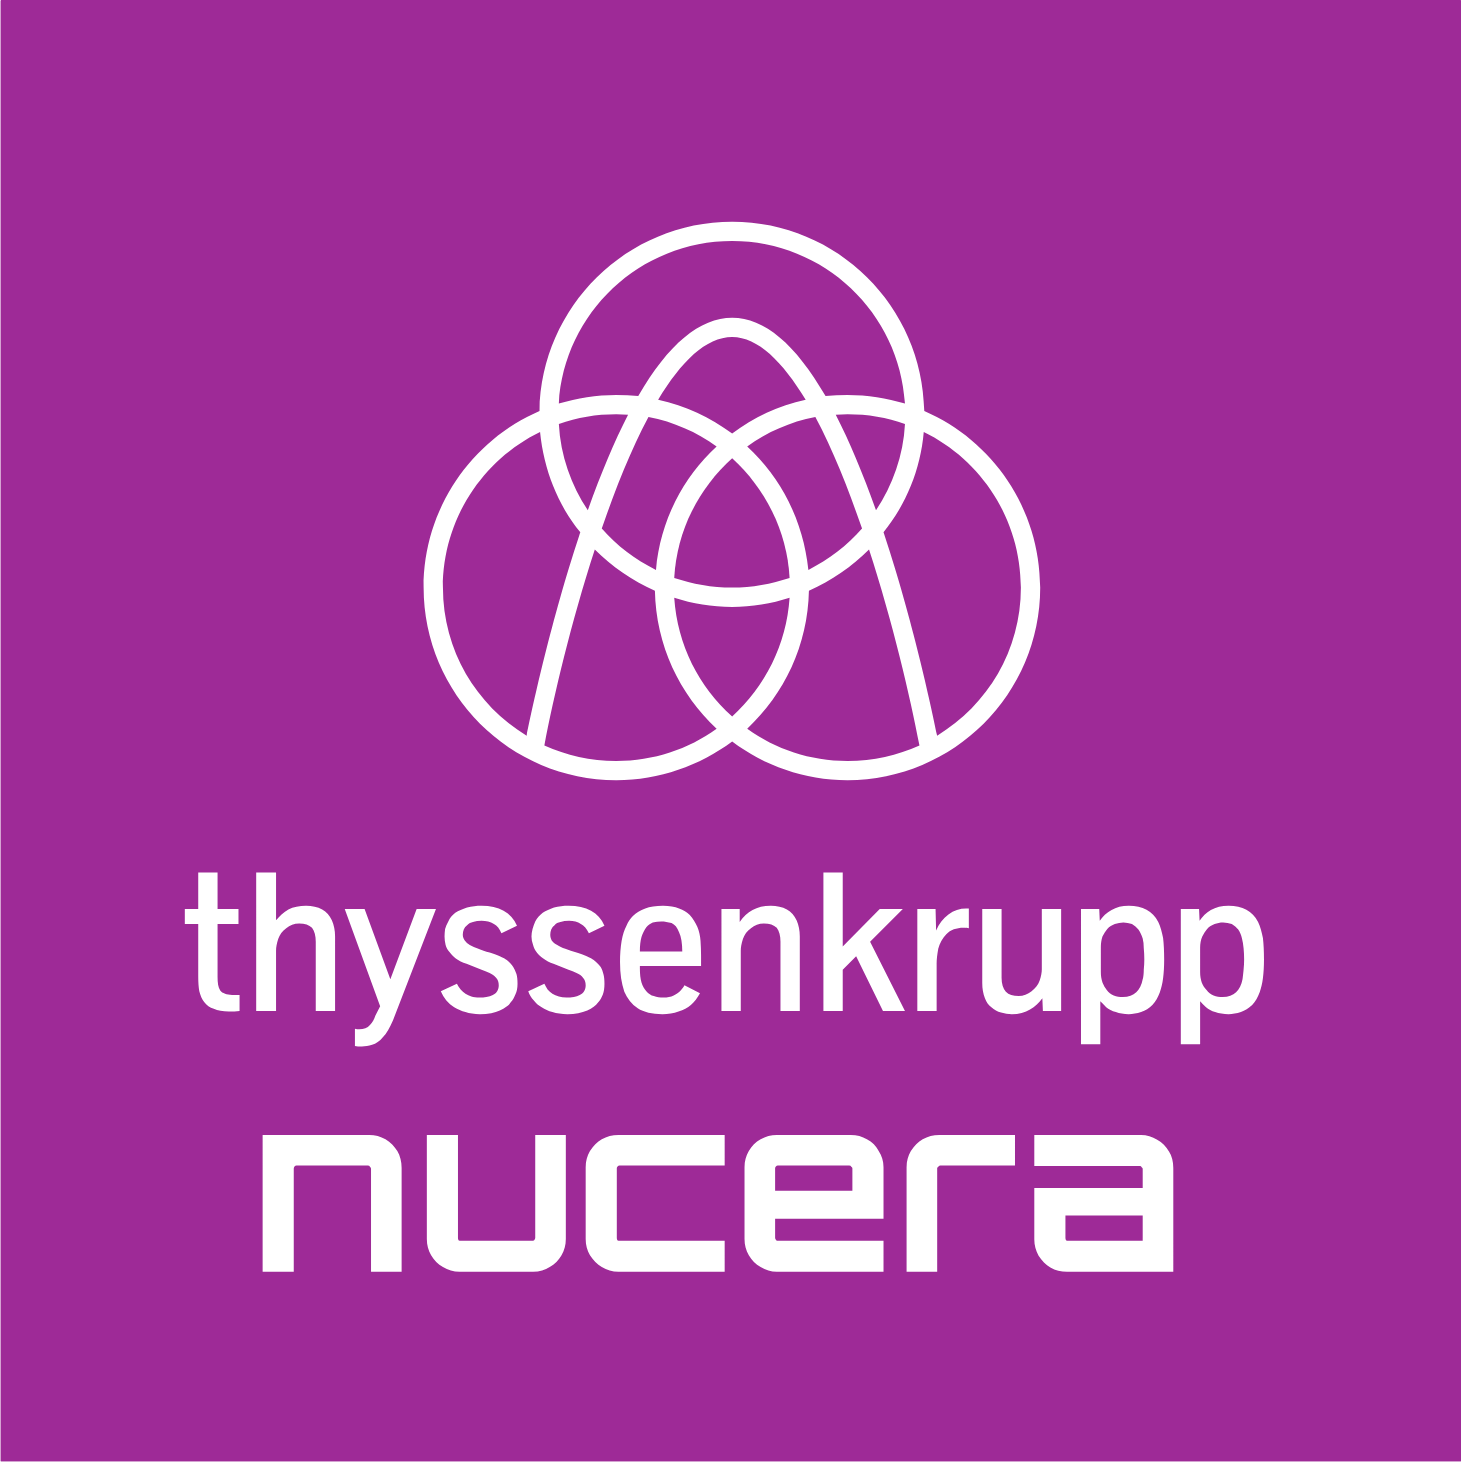 thyssenkrupp nucera logo (PNG transparent)